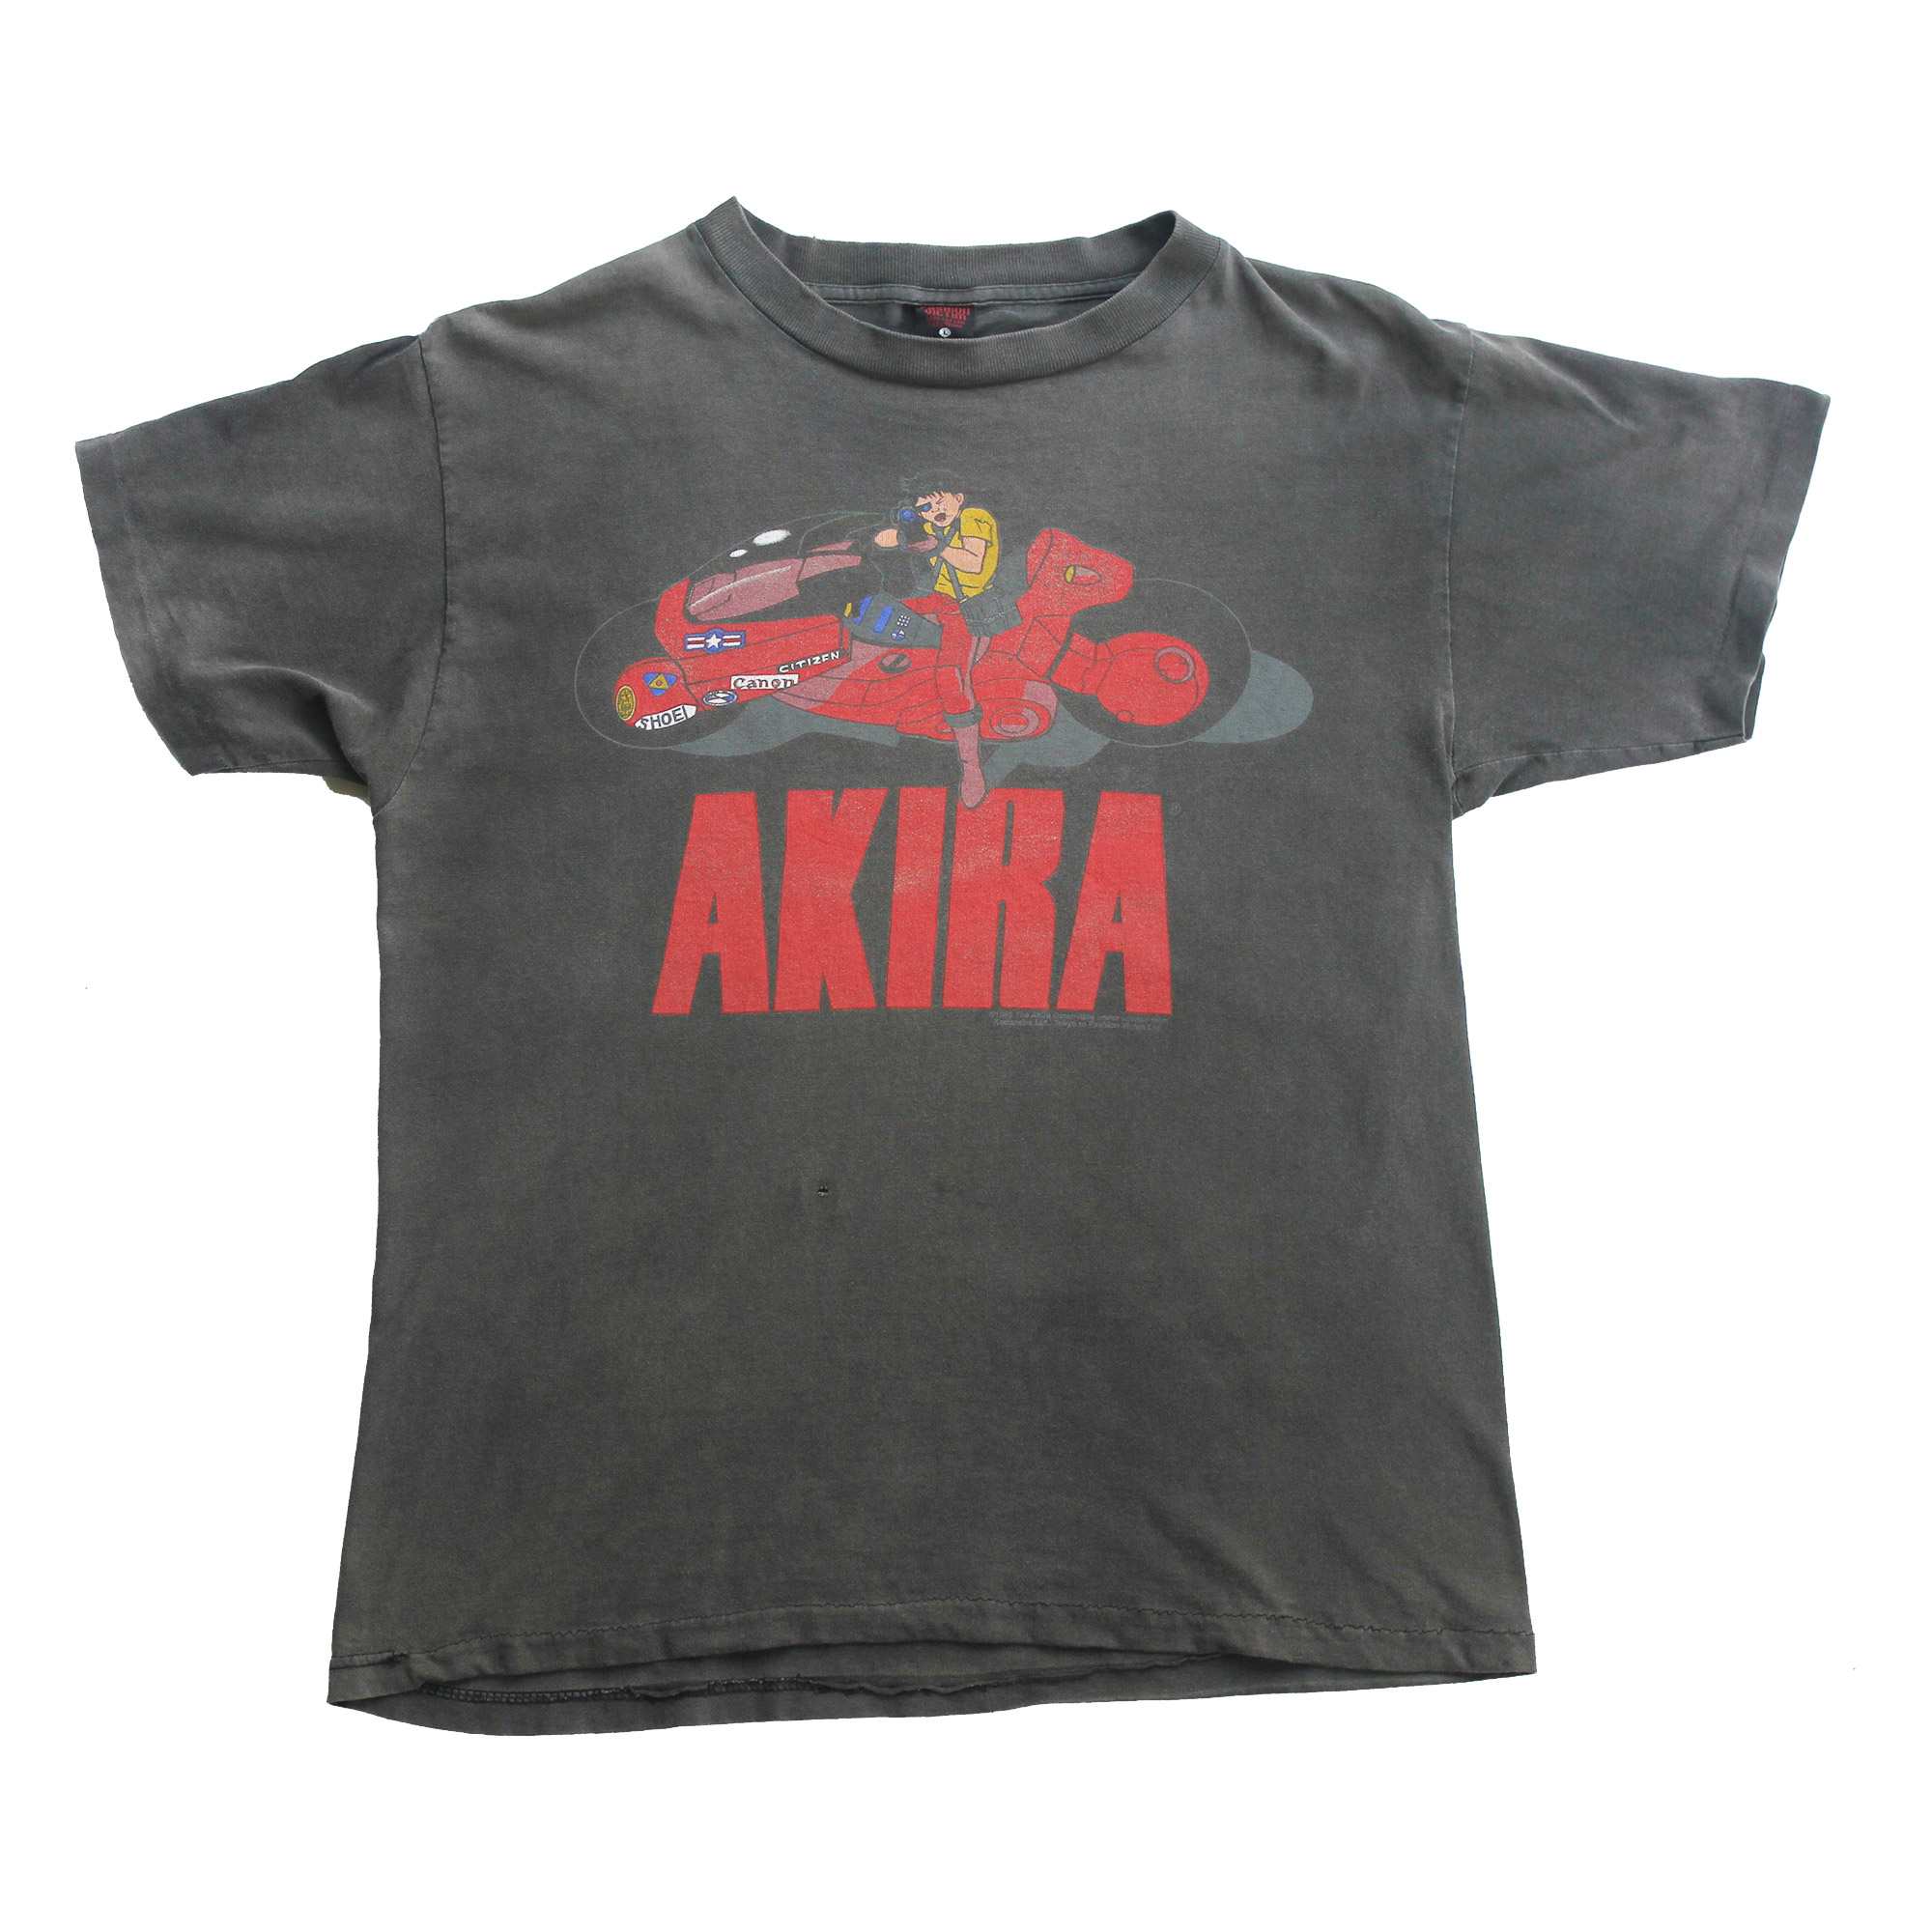 Vintage Akira Movie Kaneda on Motorcycle T-shirt, Front